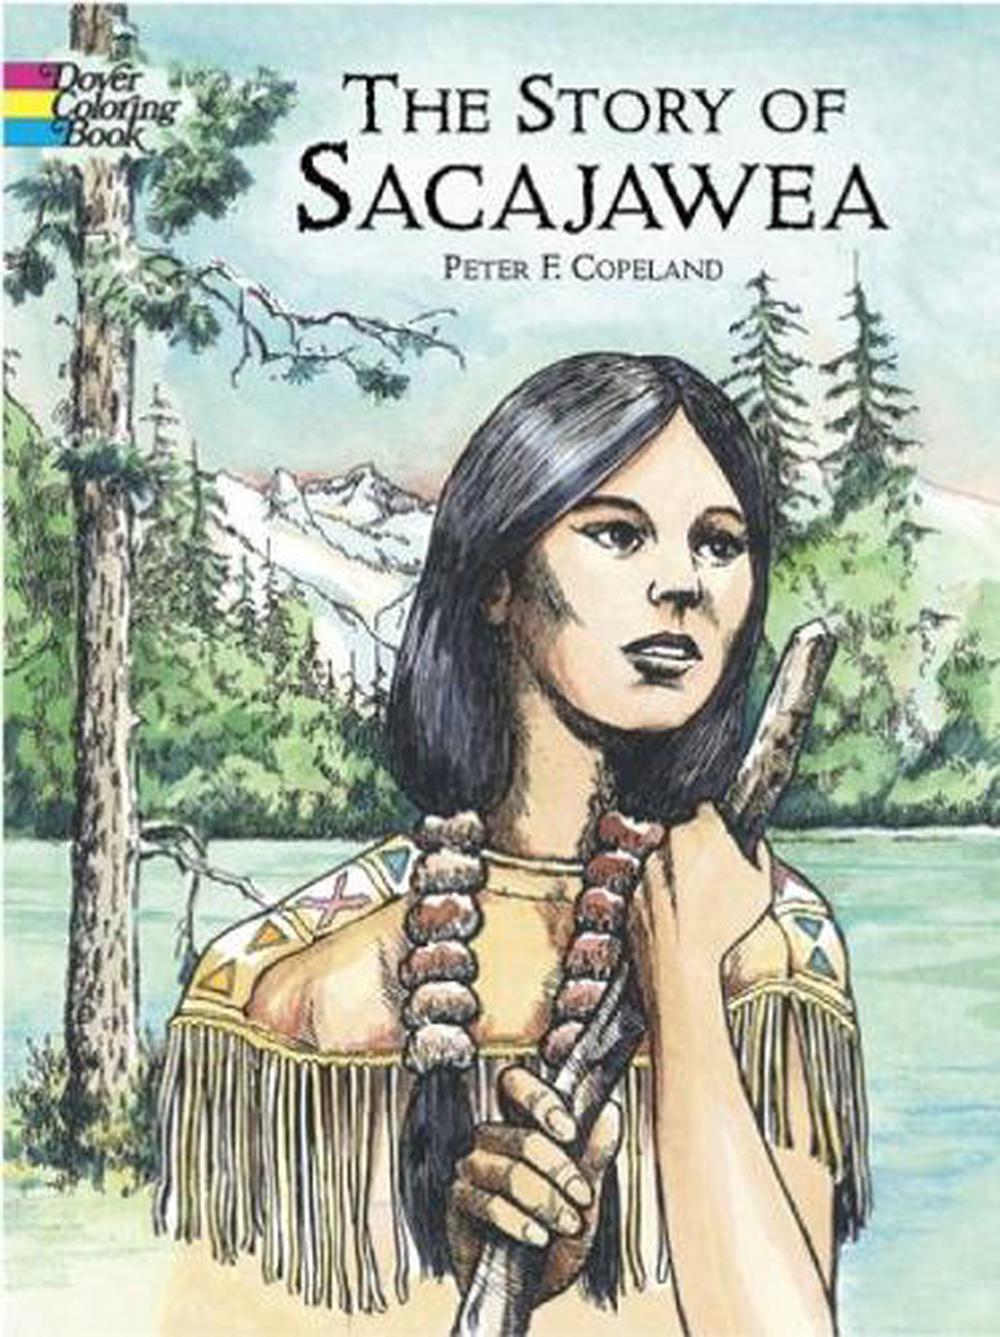 Sacajawea of the Shoshone by Natasha Yim